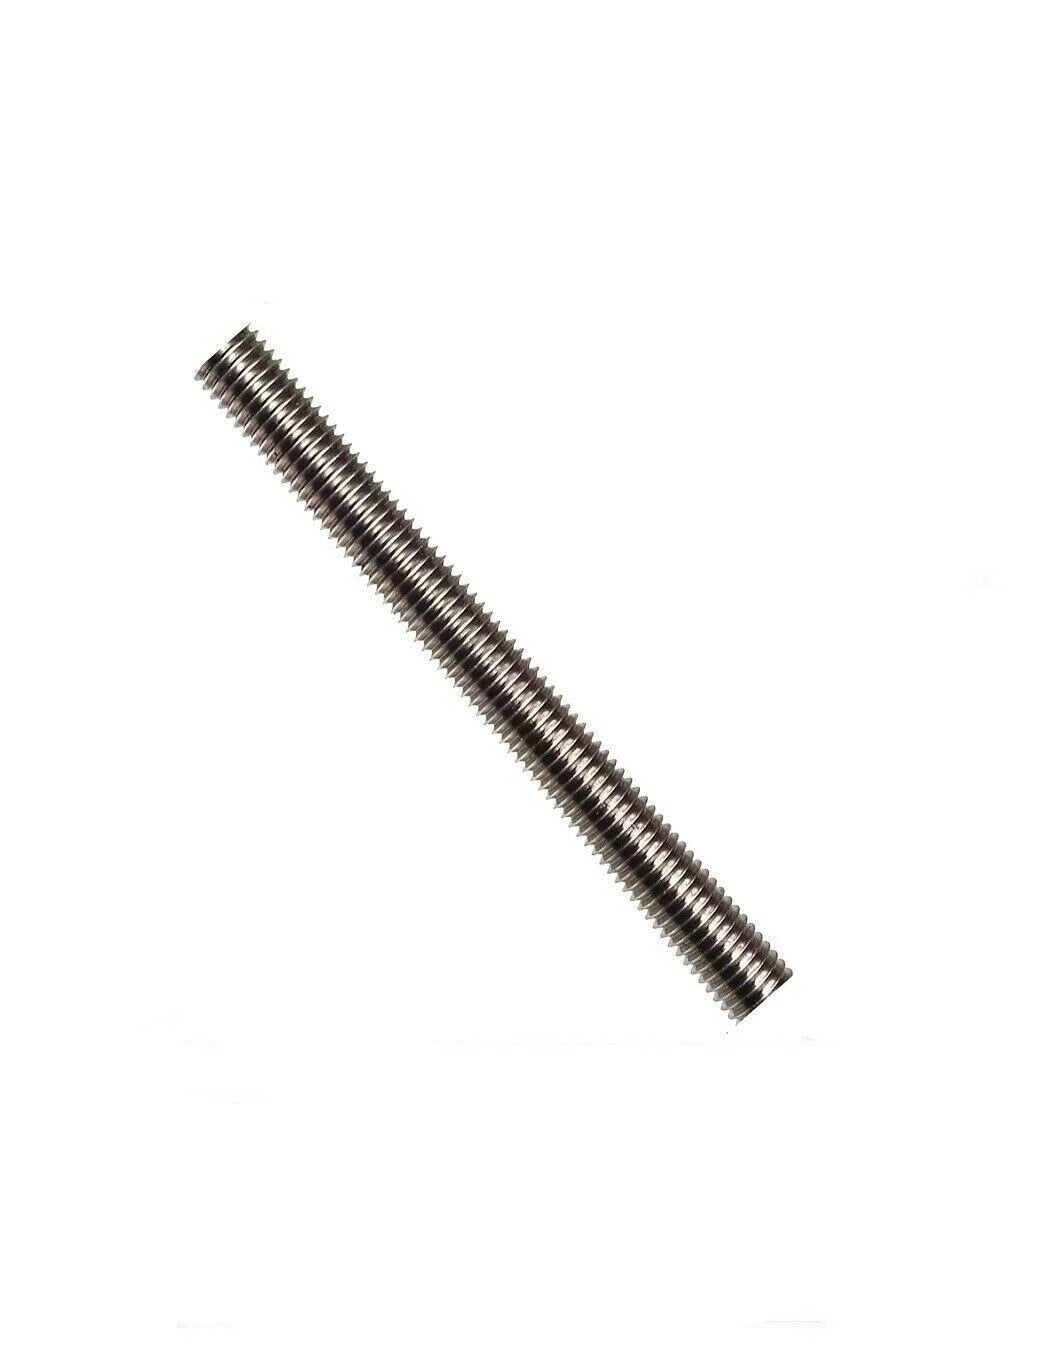 (Qty 5 Sticks) 1/2-13 x 36" Stainless Steel Threaded Rod 304 Stainless AllThread